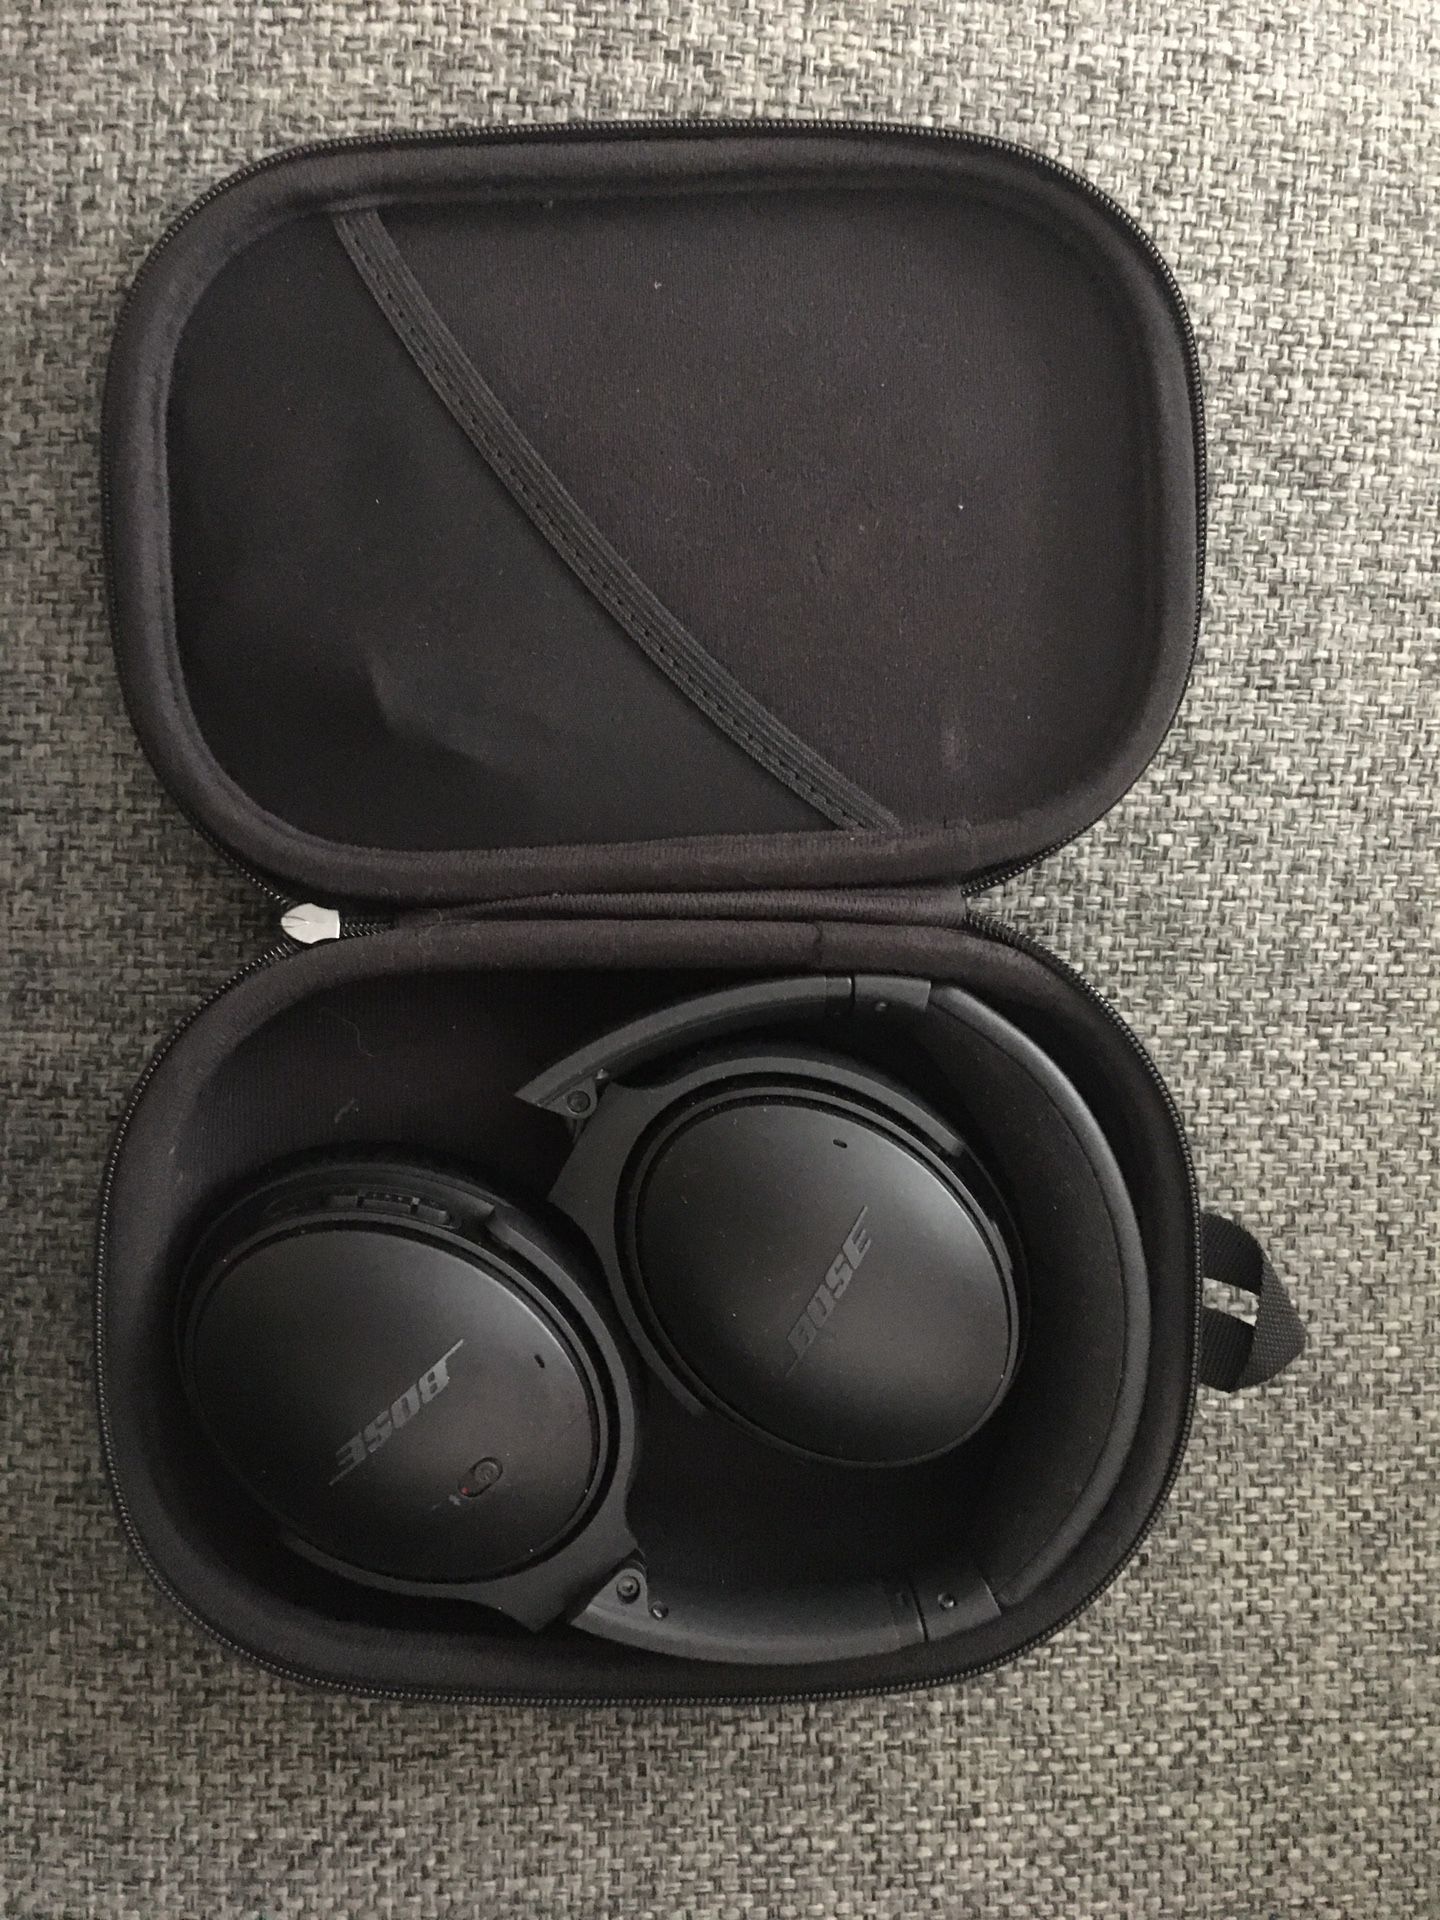 Bose QC35-II Headphones (Noise Cancelling)